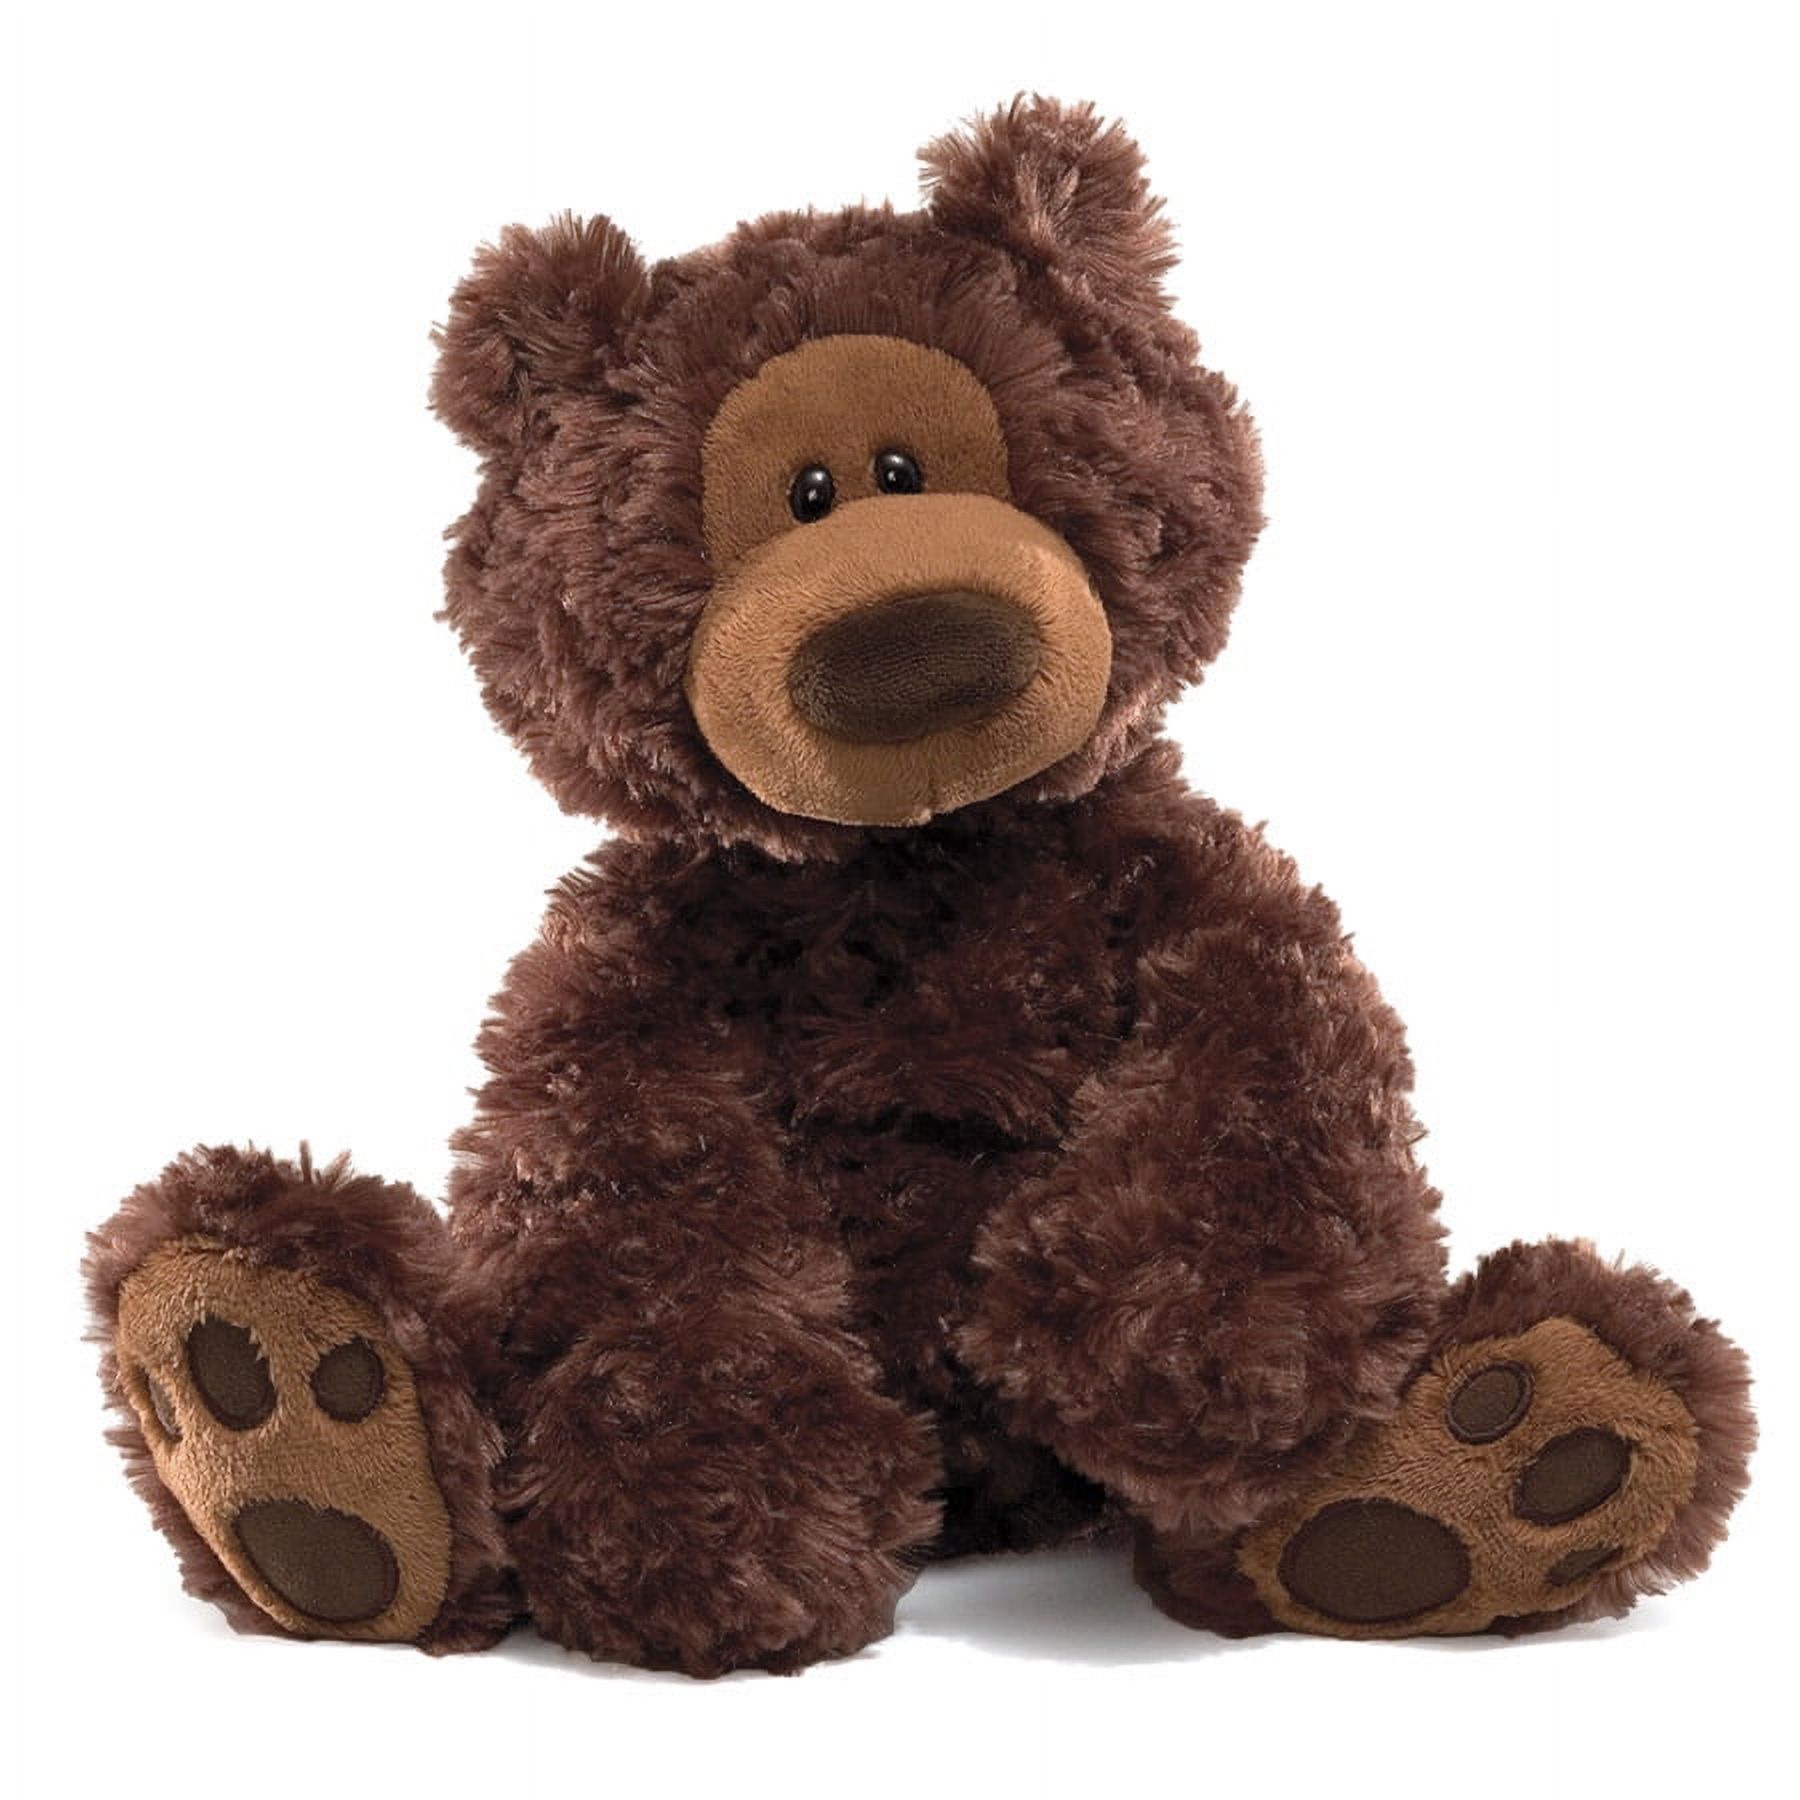 GUND Philbin Teddy Bear Stuffed Animal Plush, Chocolate Brown, 12" - image 1 of 2